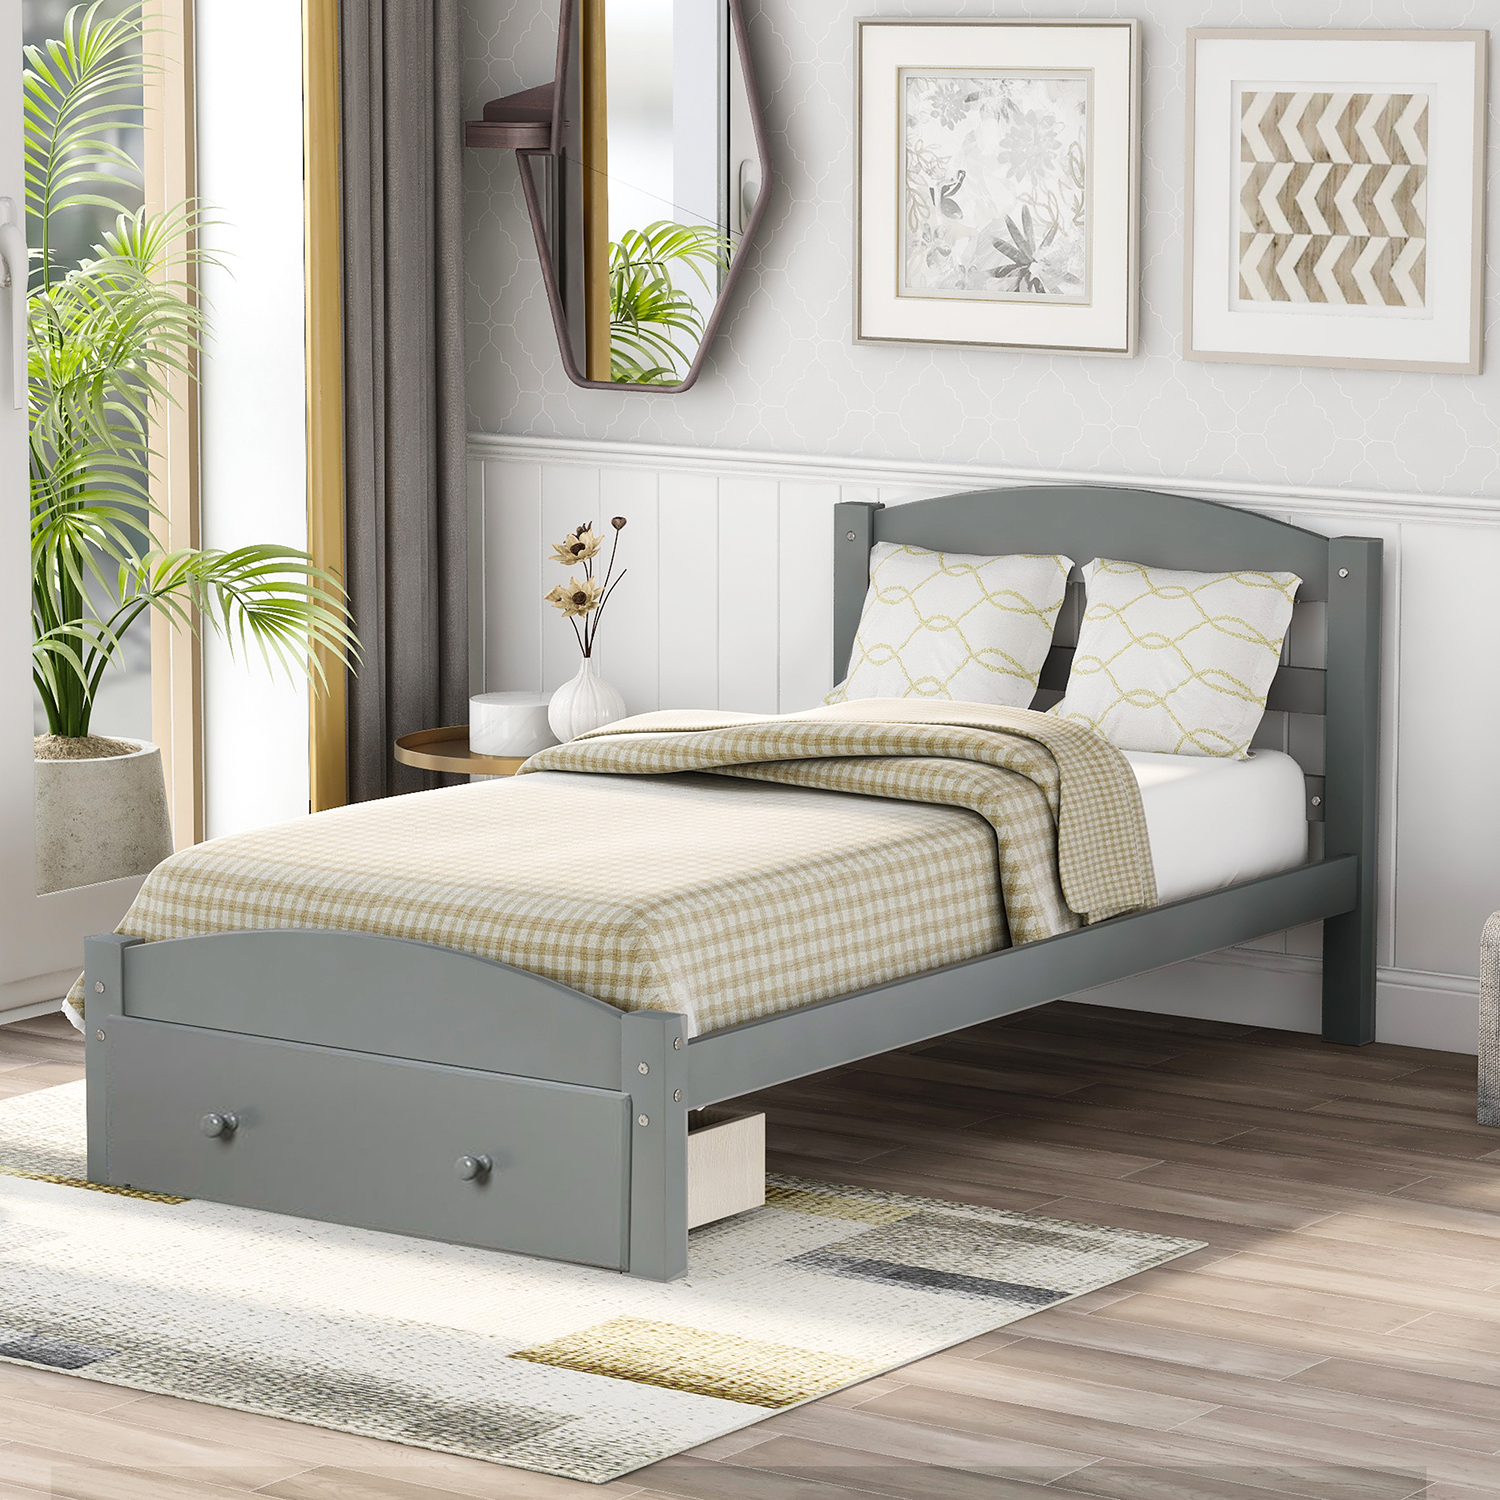 Twin Size Wood Platform Bed w/ Headboard Wood Slat Support No Box Spring Needed 